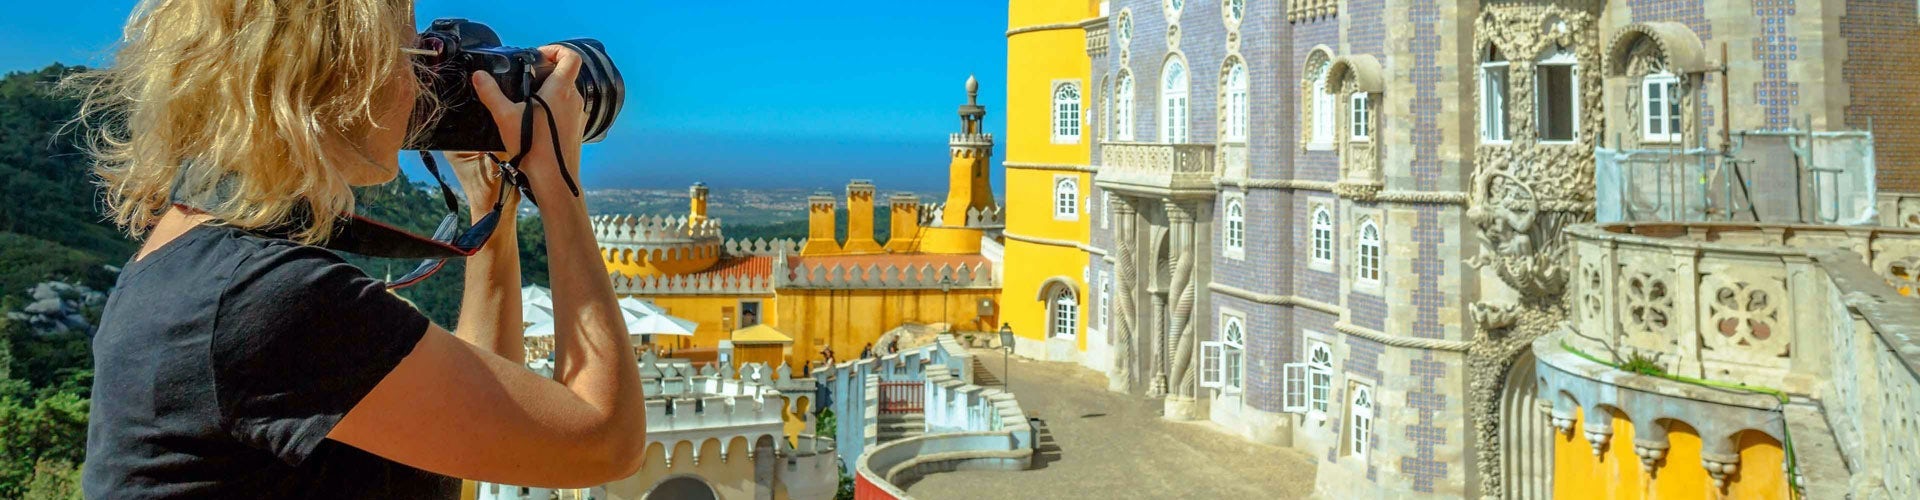 Tour Sintra Lisboa Cascais 2020